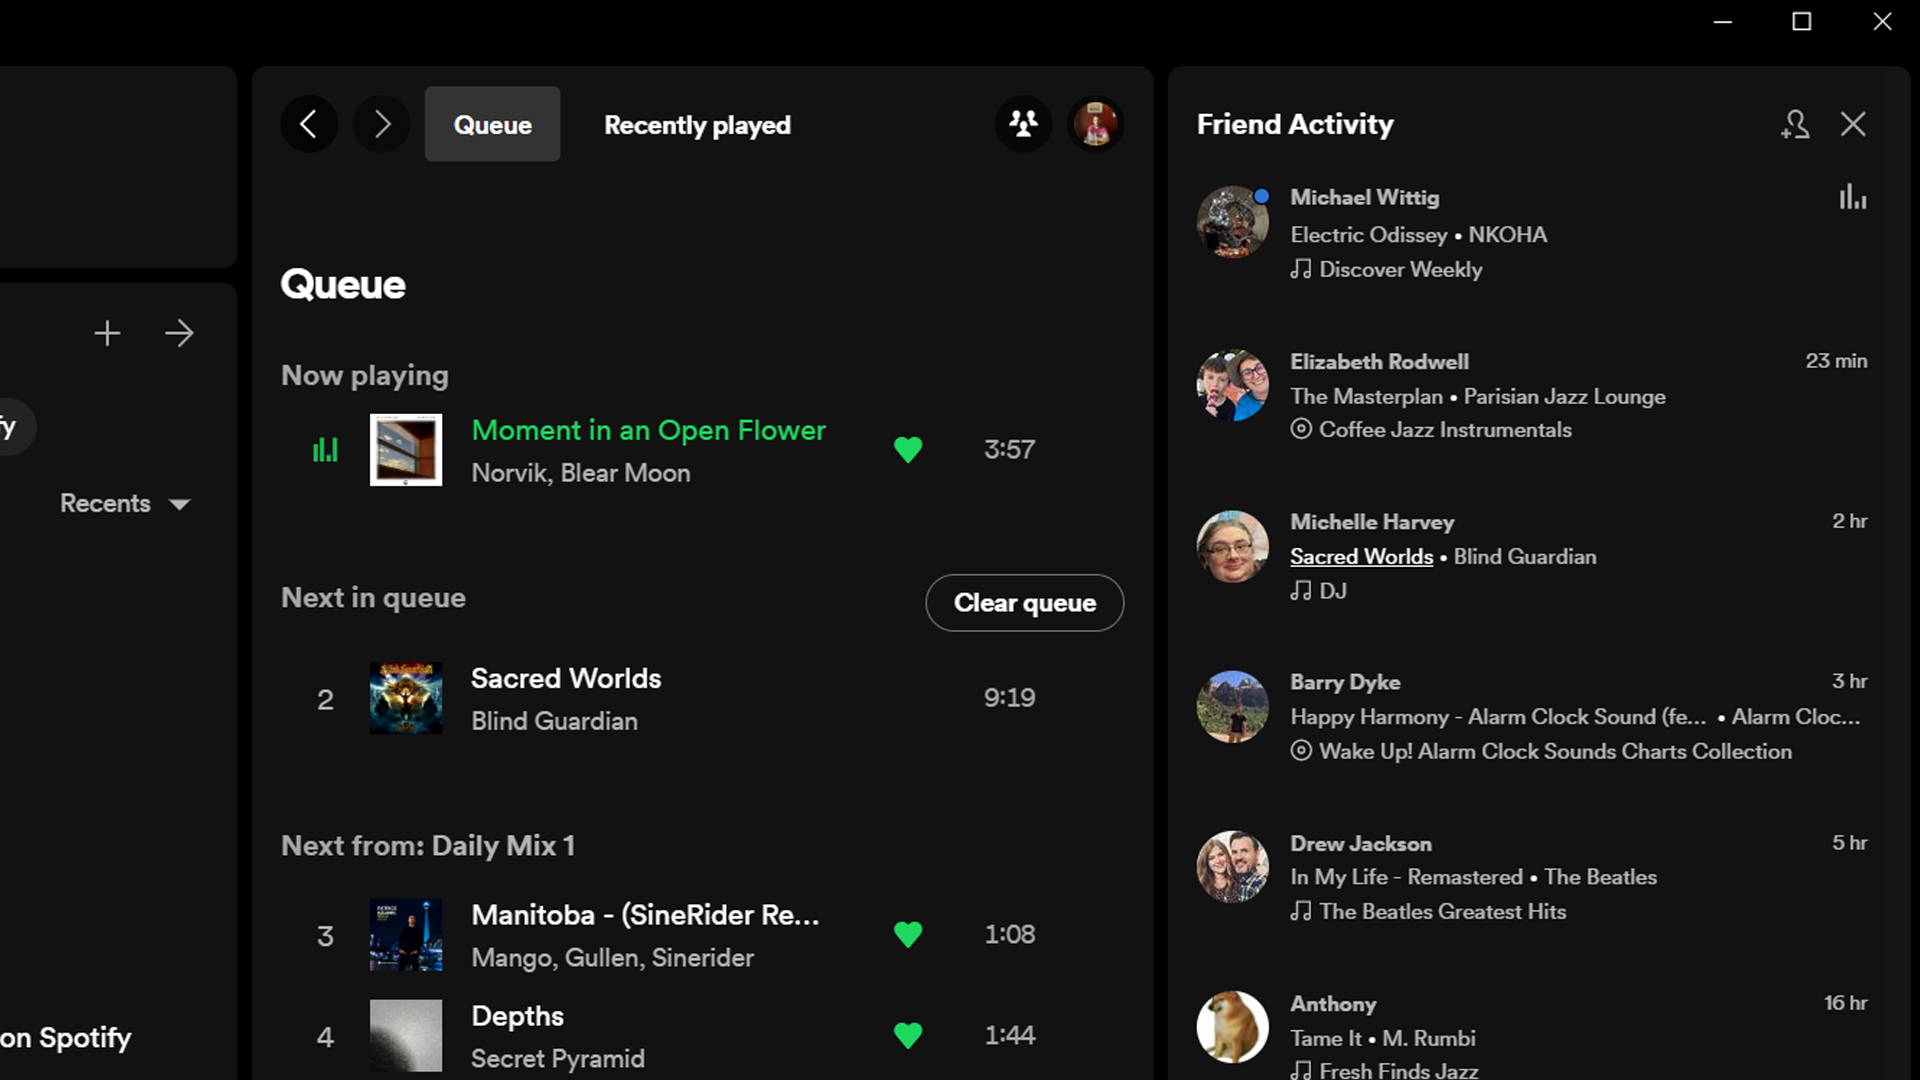 Spotify Friend Activity in the Windows app